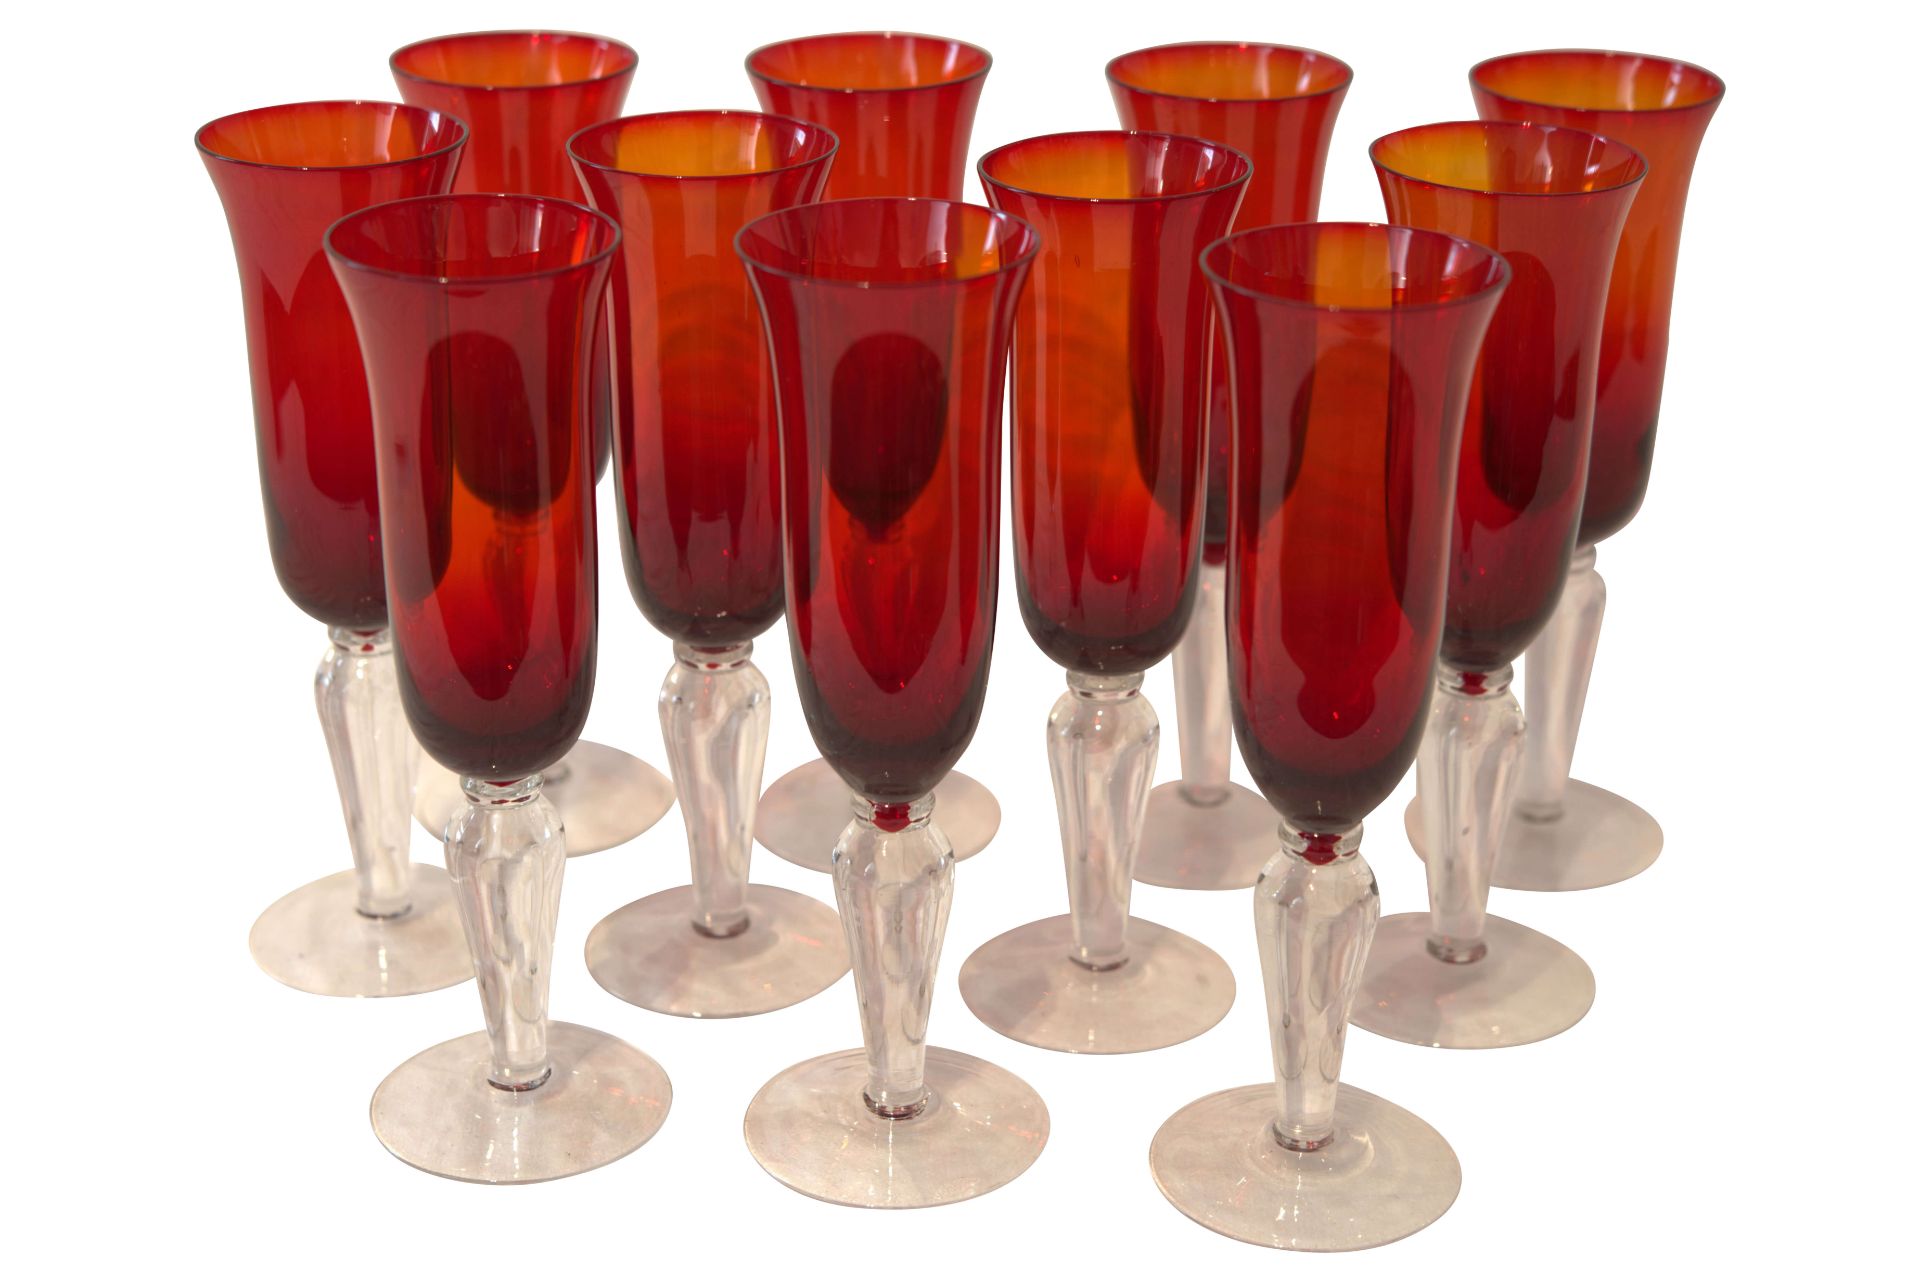 11 langstielige Gläser rotes und weißes Glas | 11 Long Stem Glasses Red and White Glass